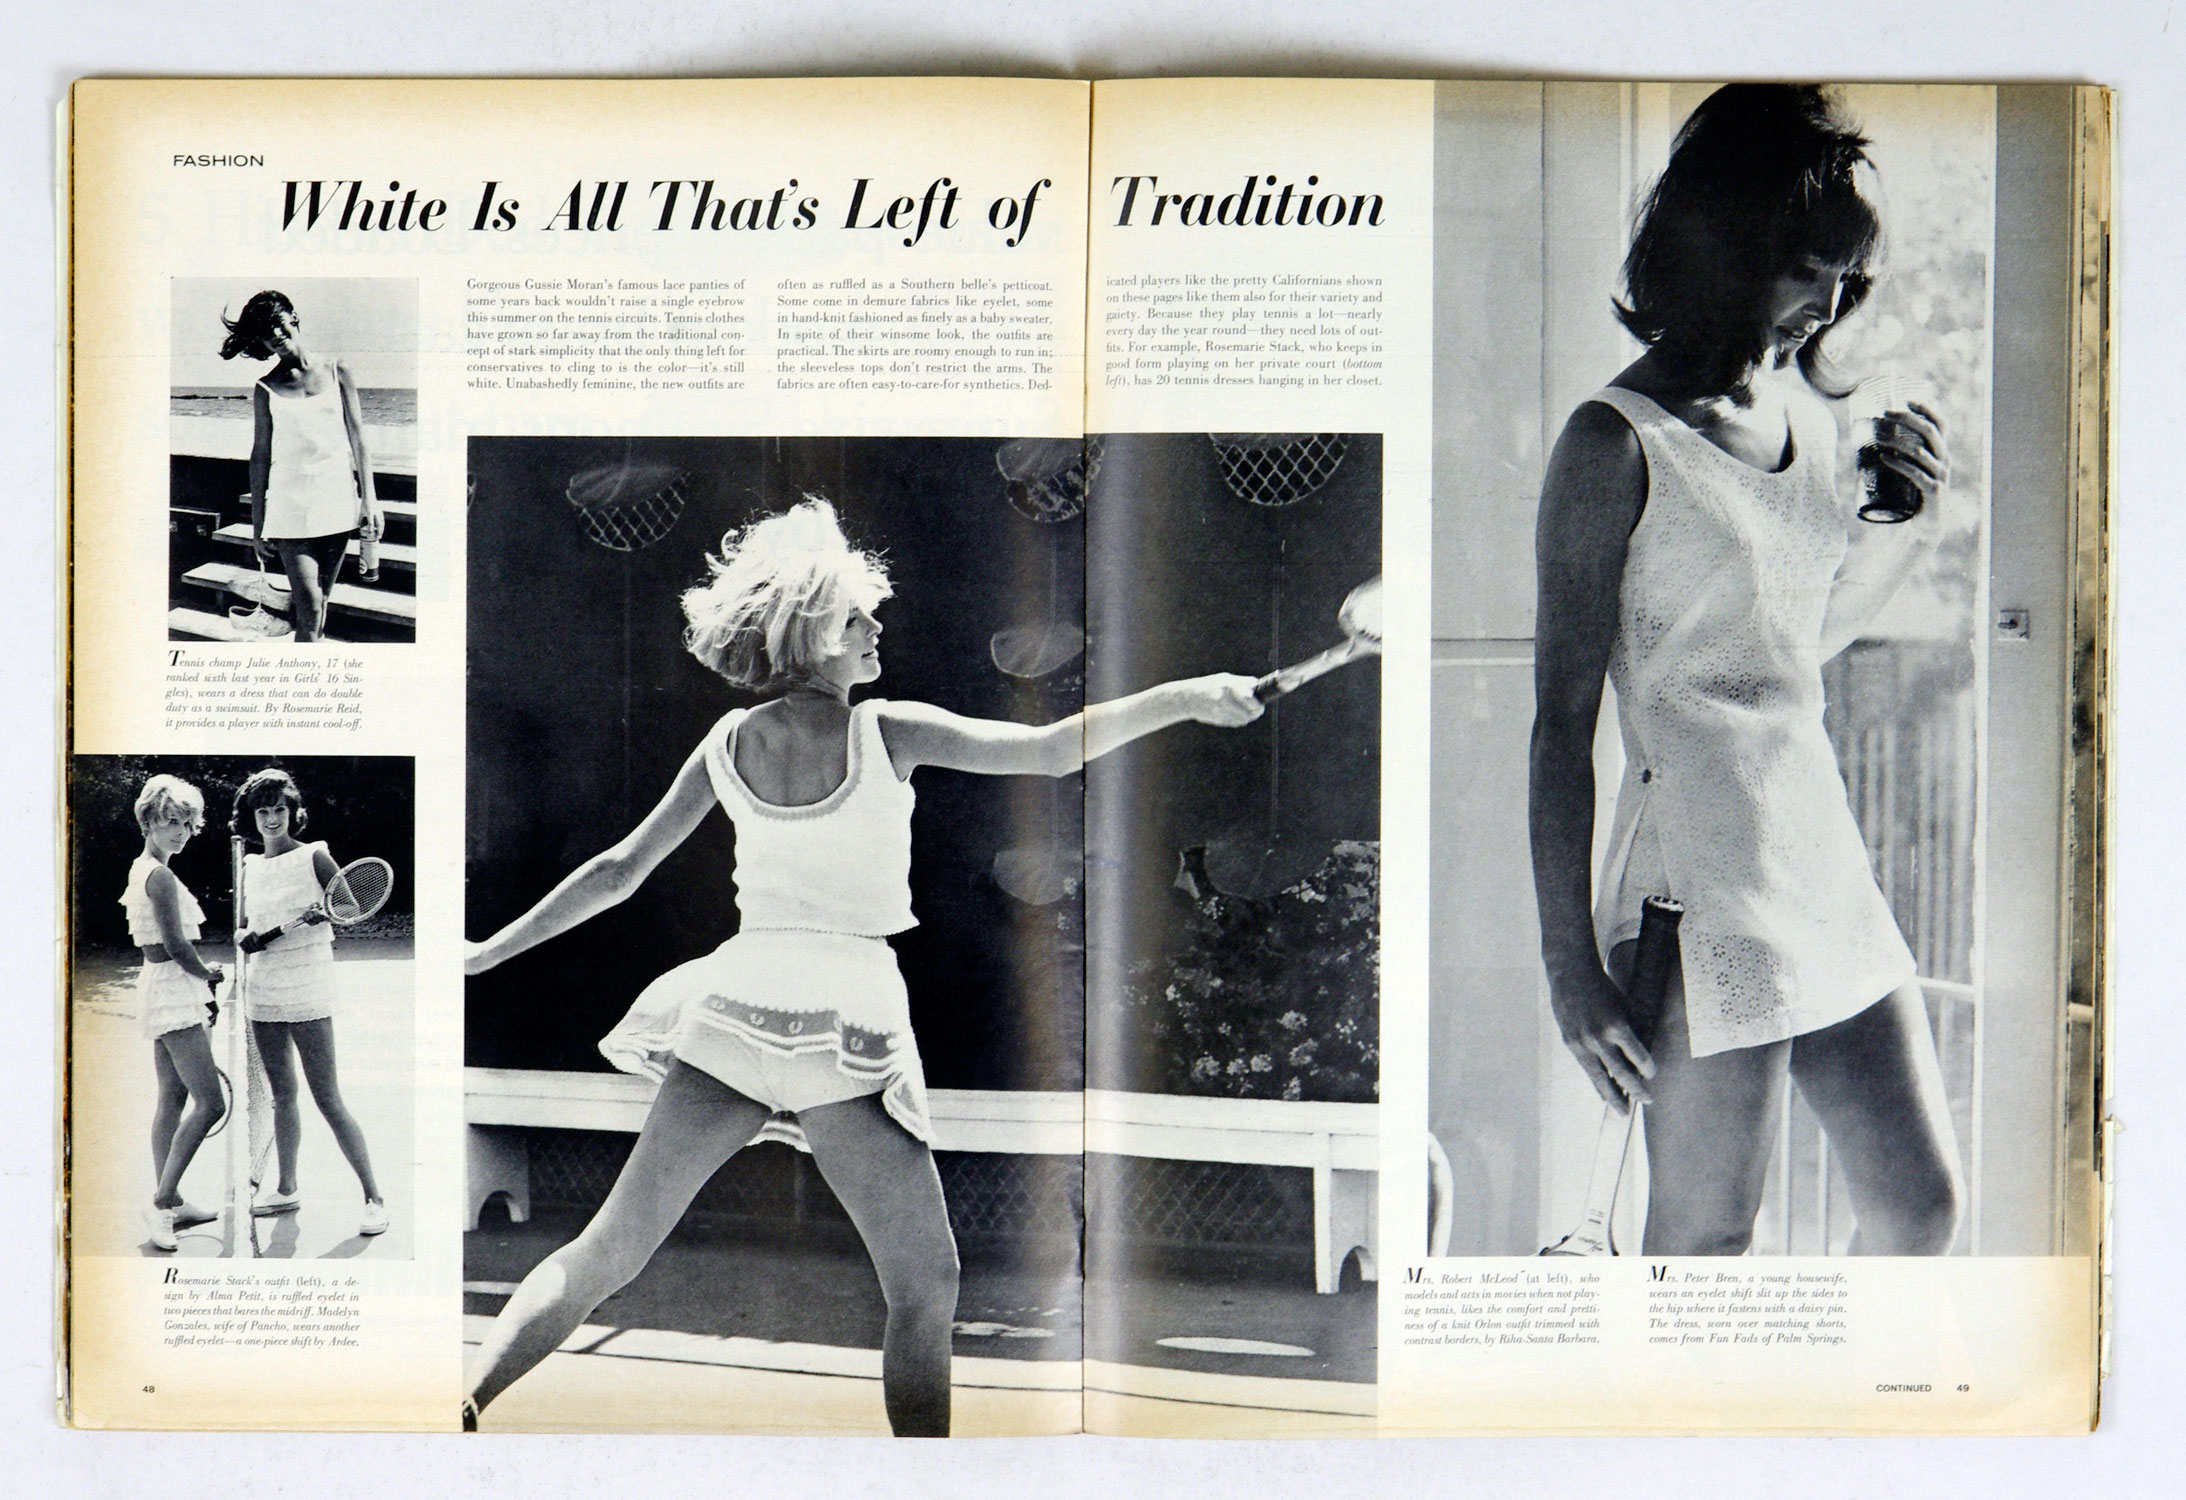 LIFE Magazine Back Issue 1965 August 13 Lady Bird Johnson